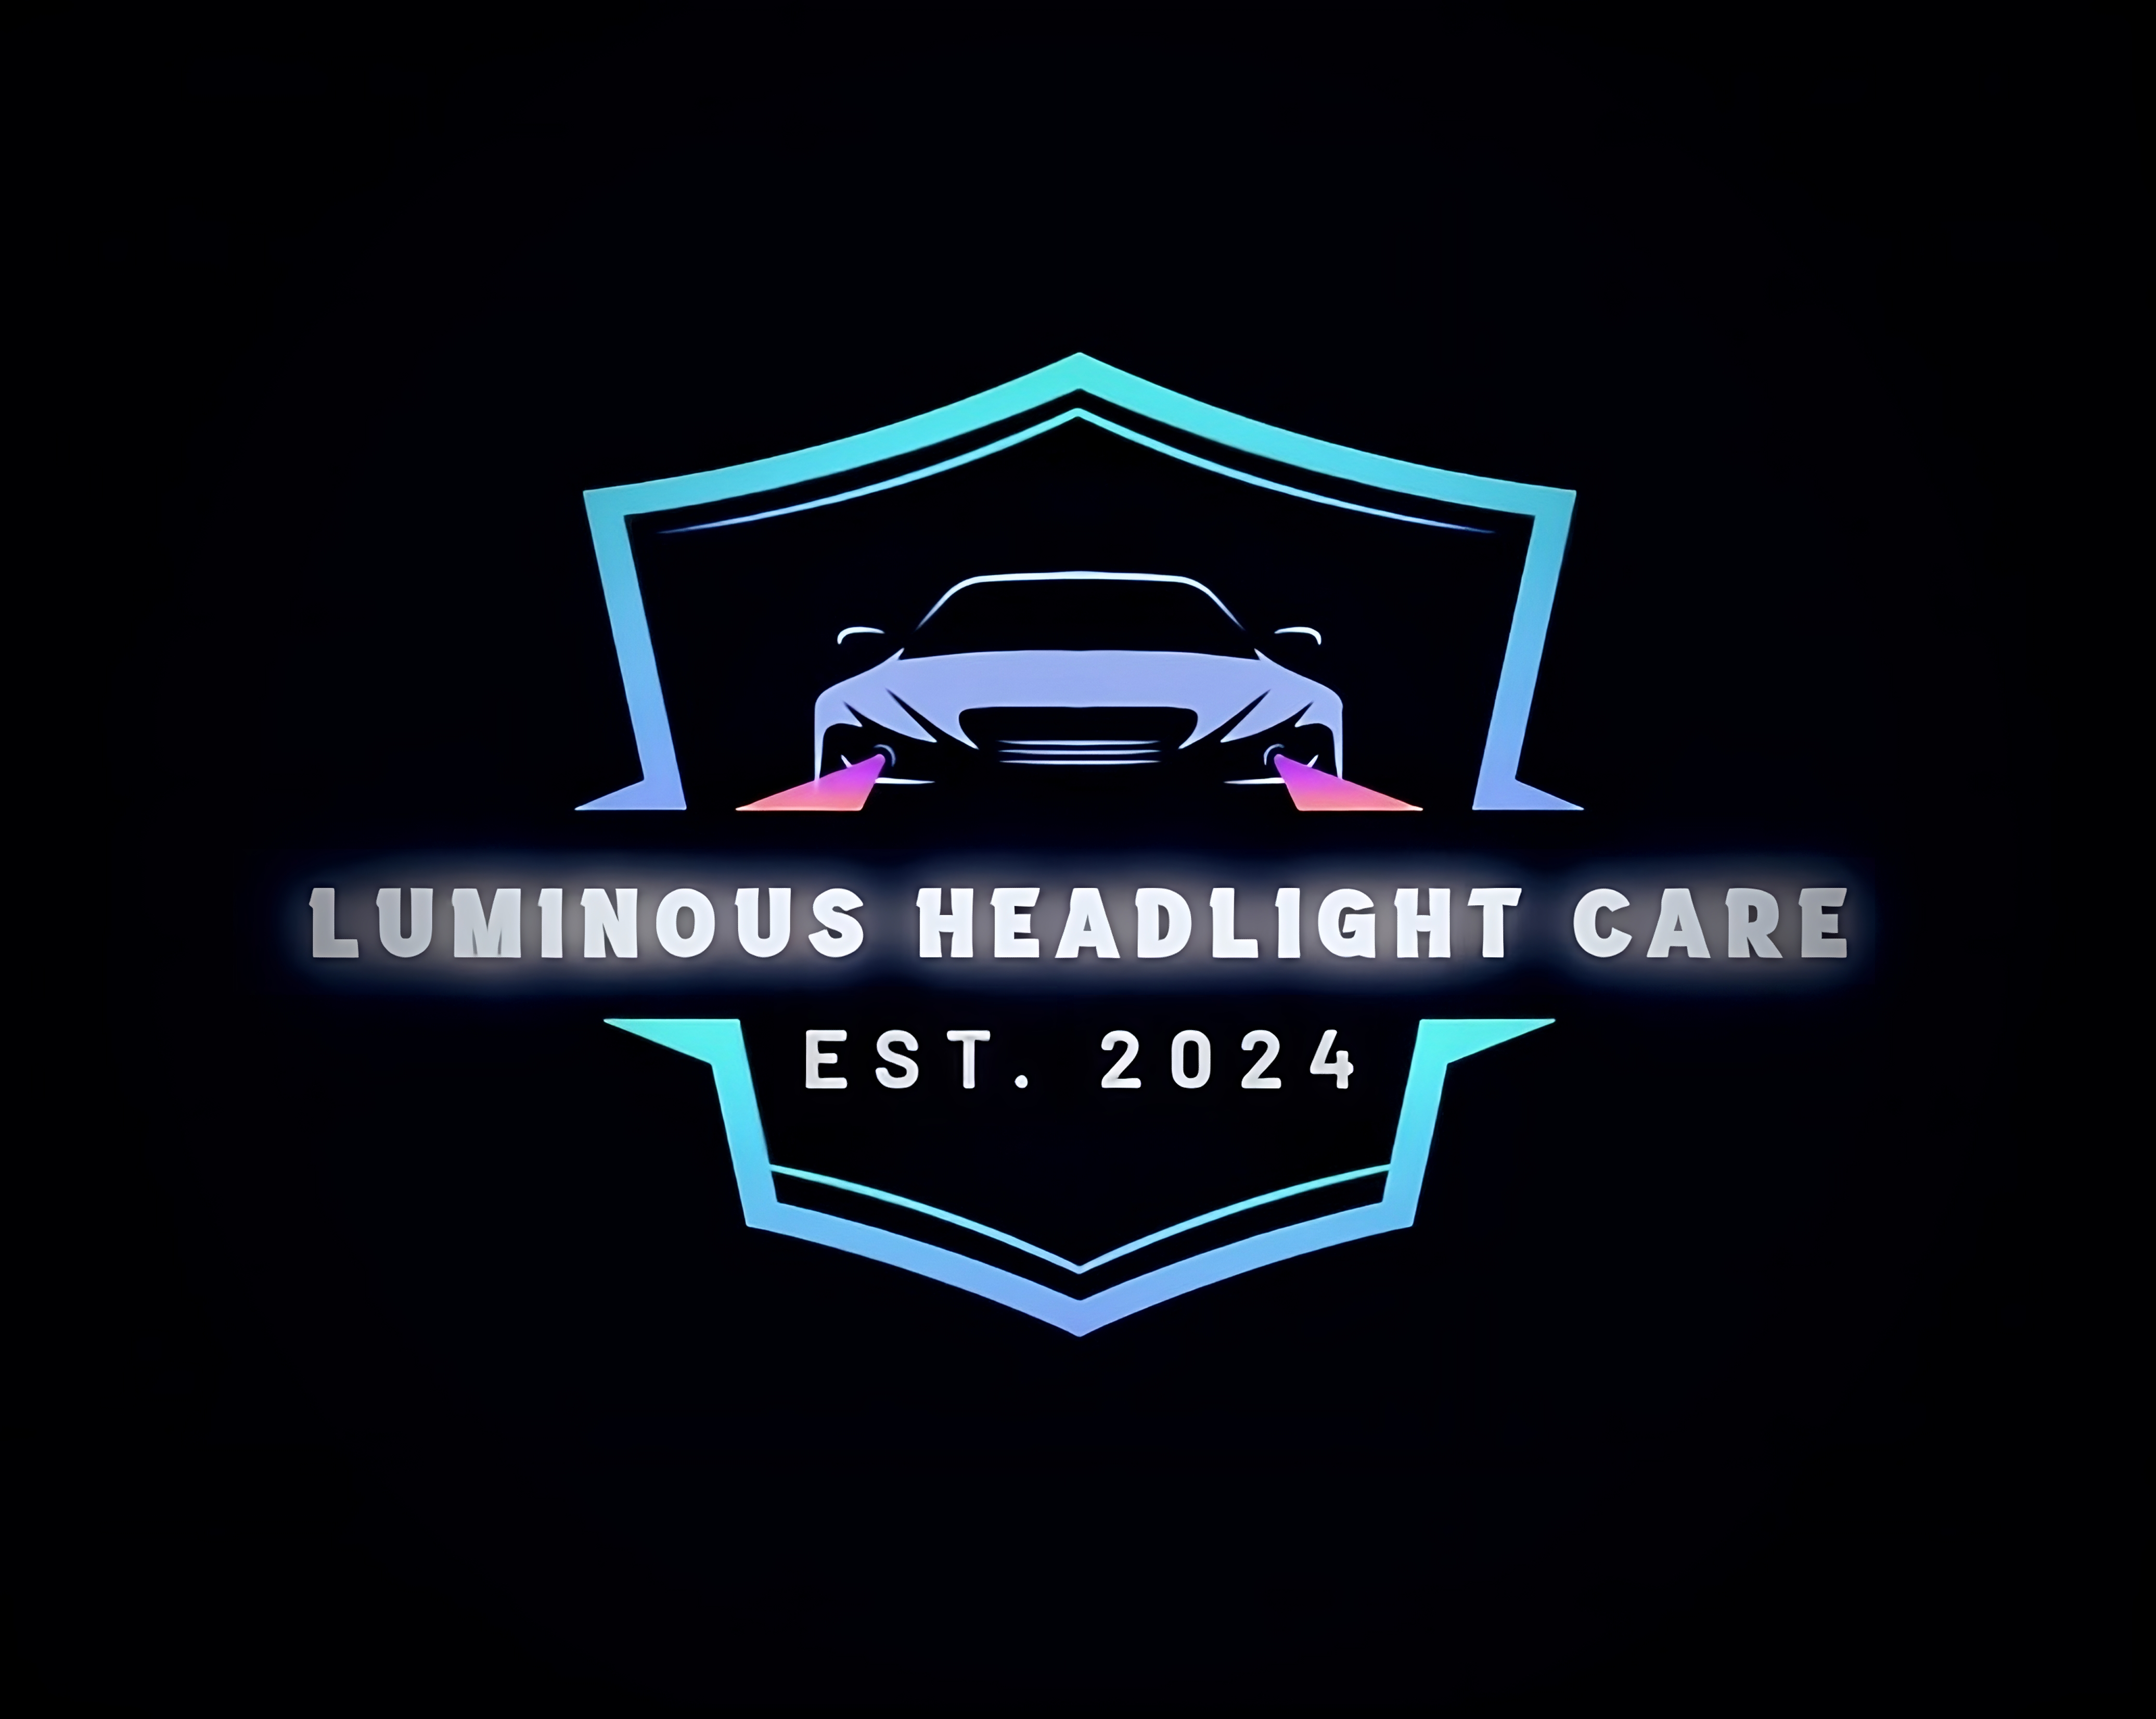 Luminous Headlight Care